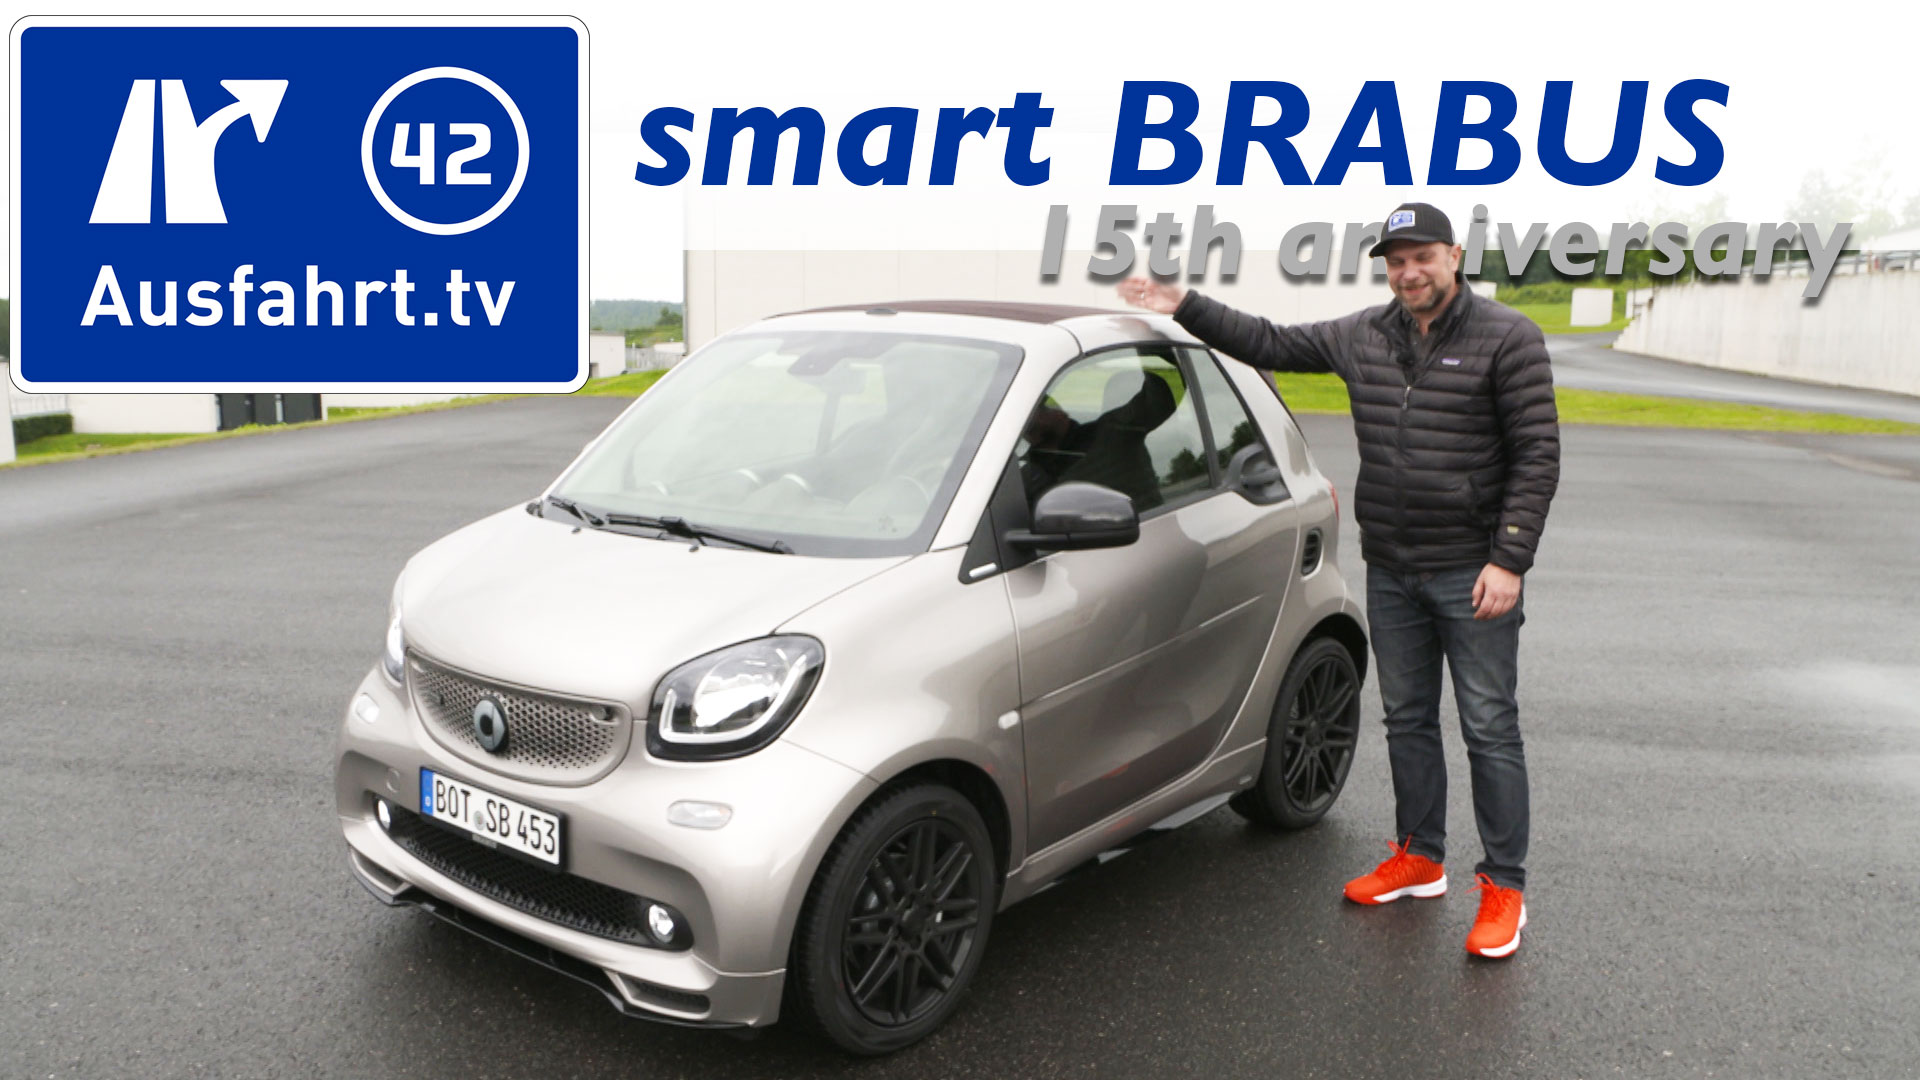 Limited - 150 x Smart Brabus 15th anniversary edition